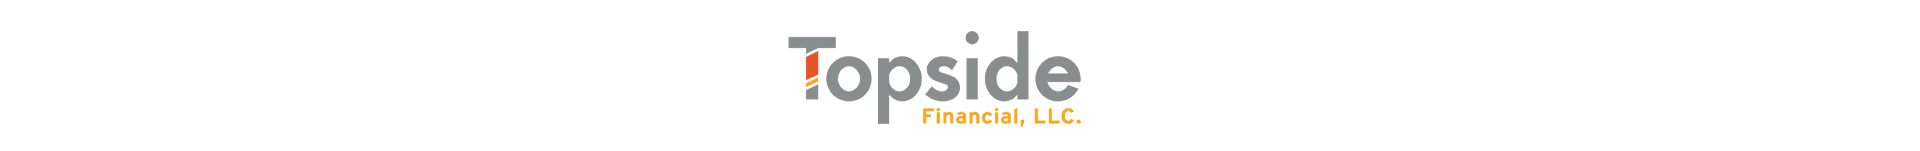 Topside Financial, LLC.